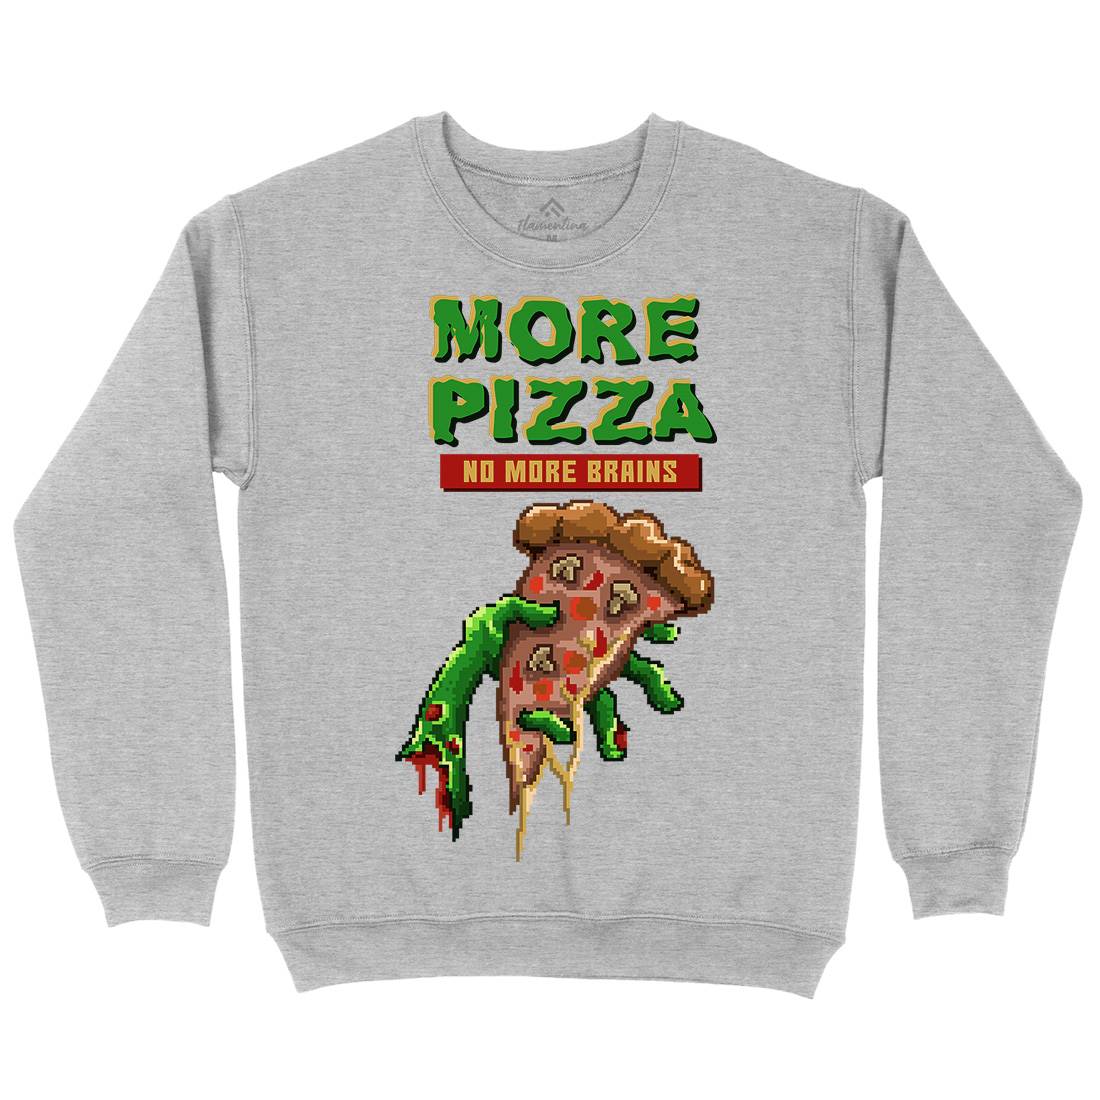 Zombie Pizza Kids Crew Neck Sweatshirt Food B982